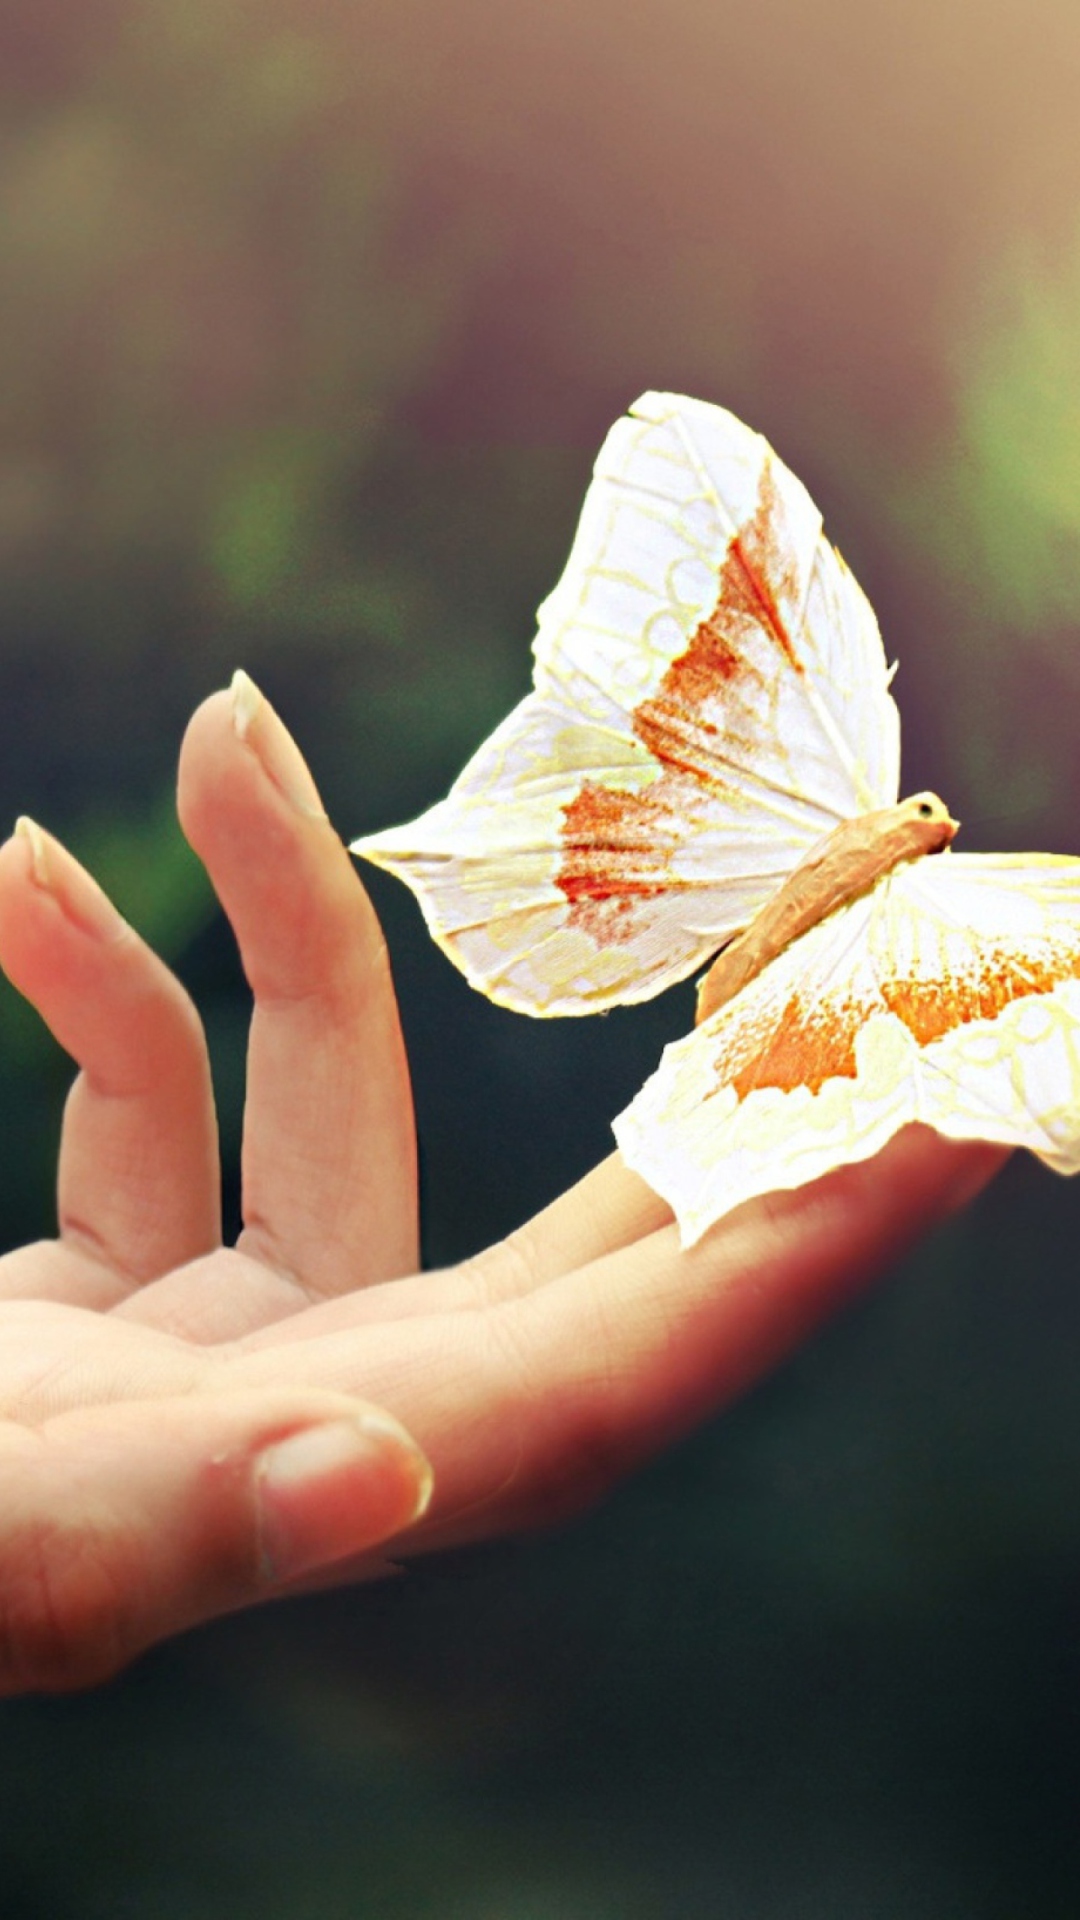 Butterfly In Her Hands wallpaper 1080x1920